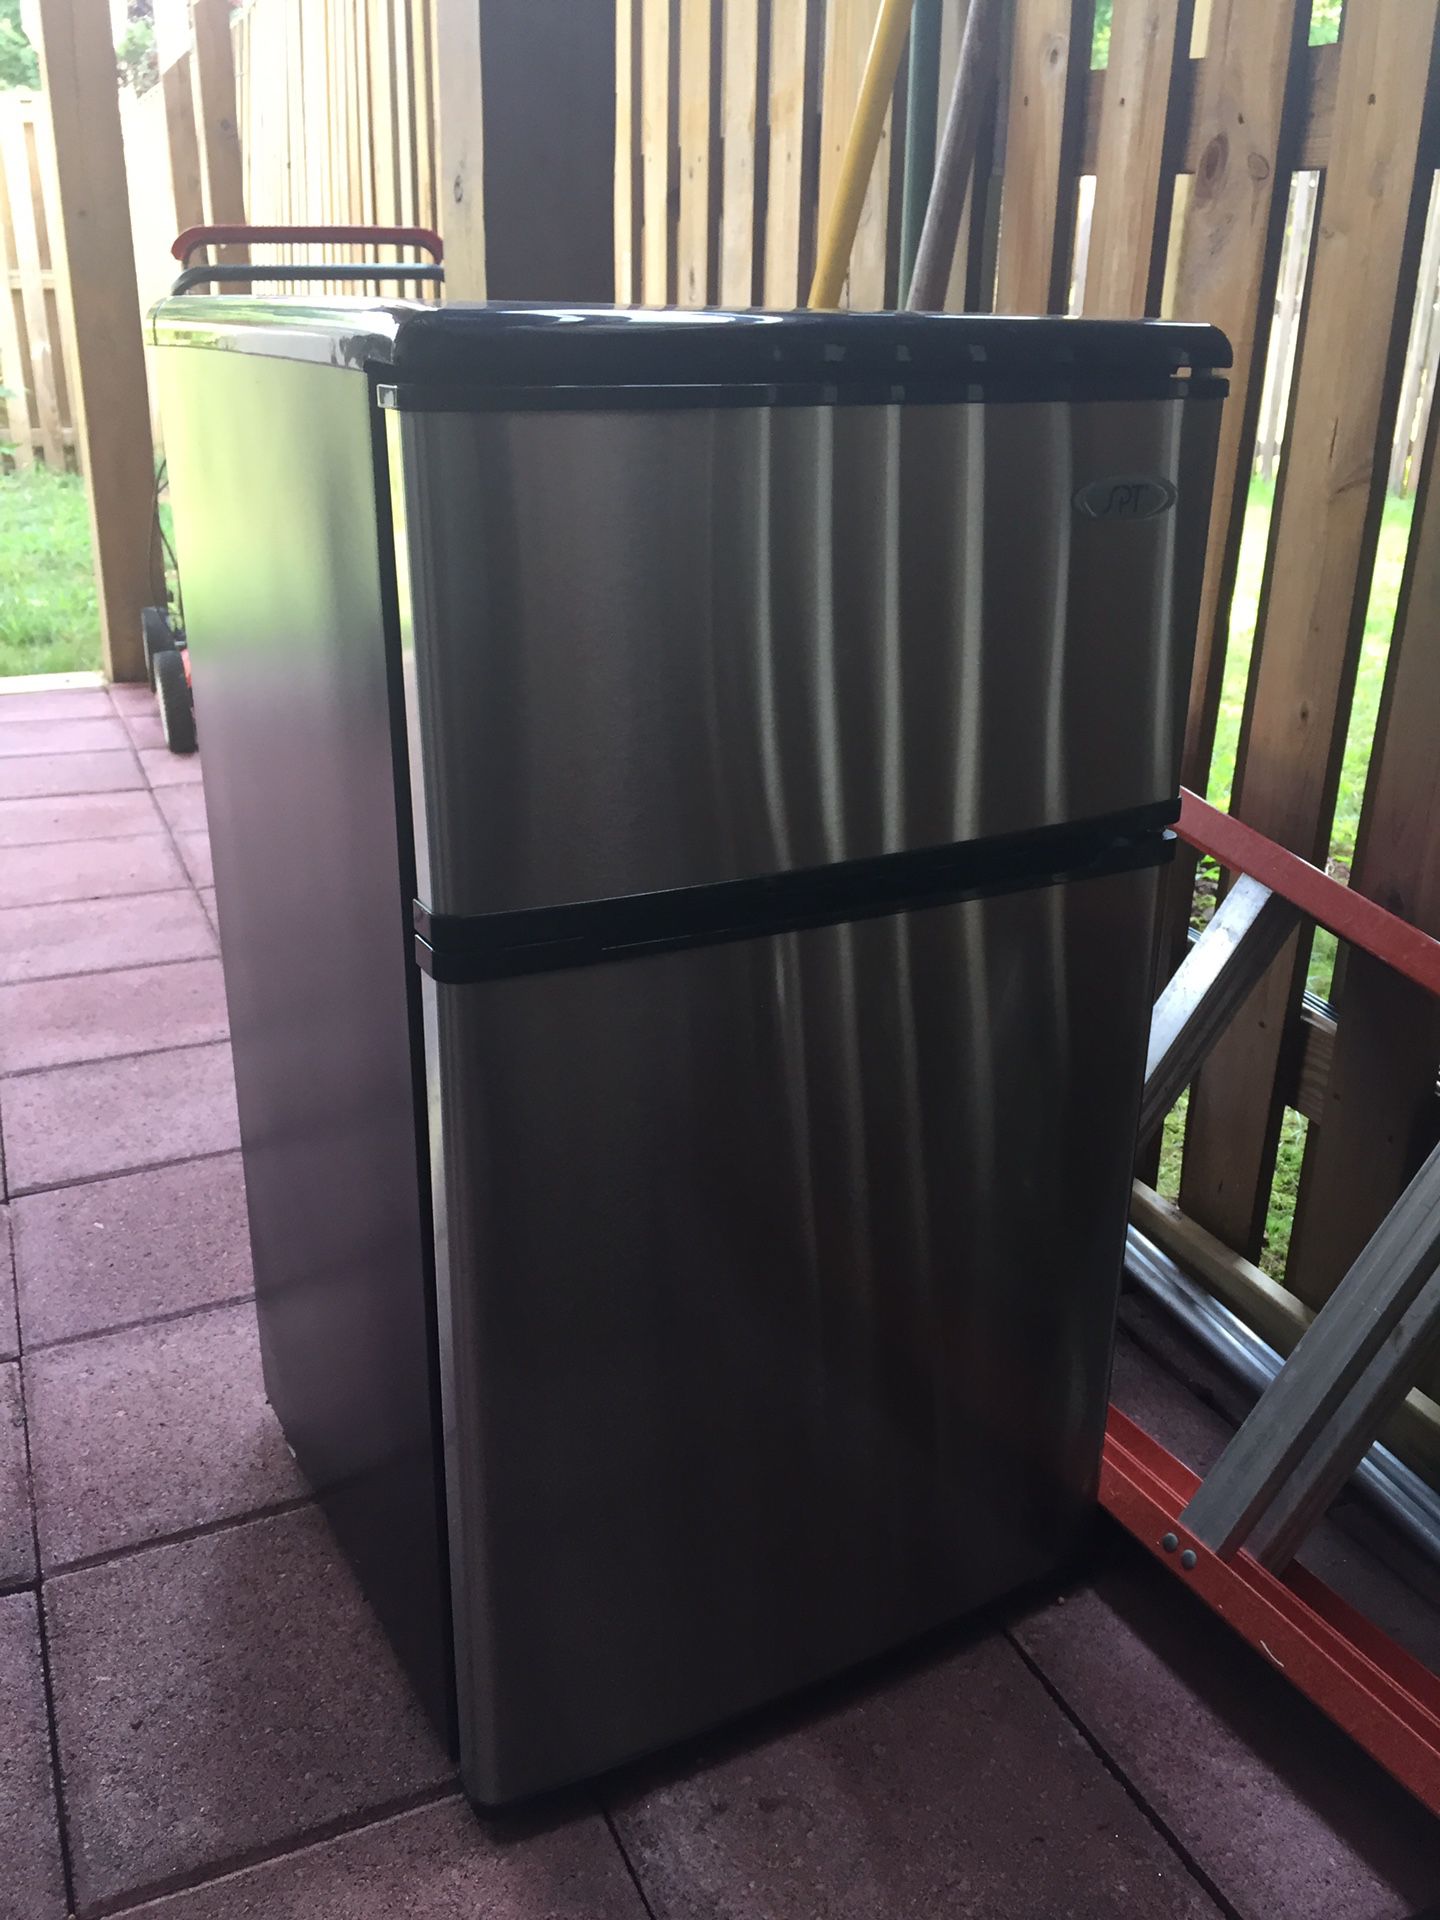 Mini-Refrigerator, great for college